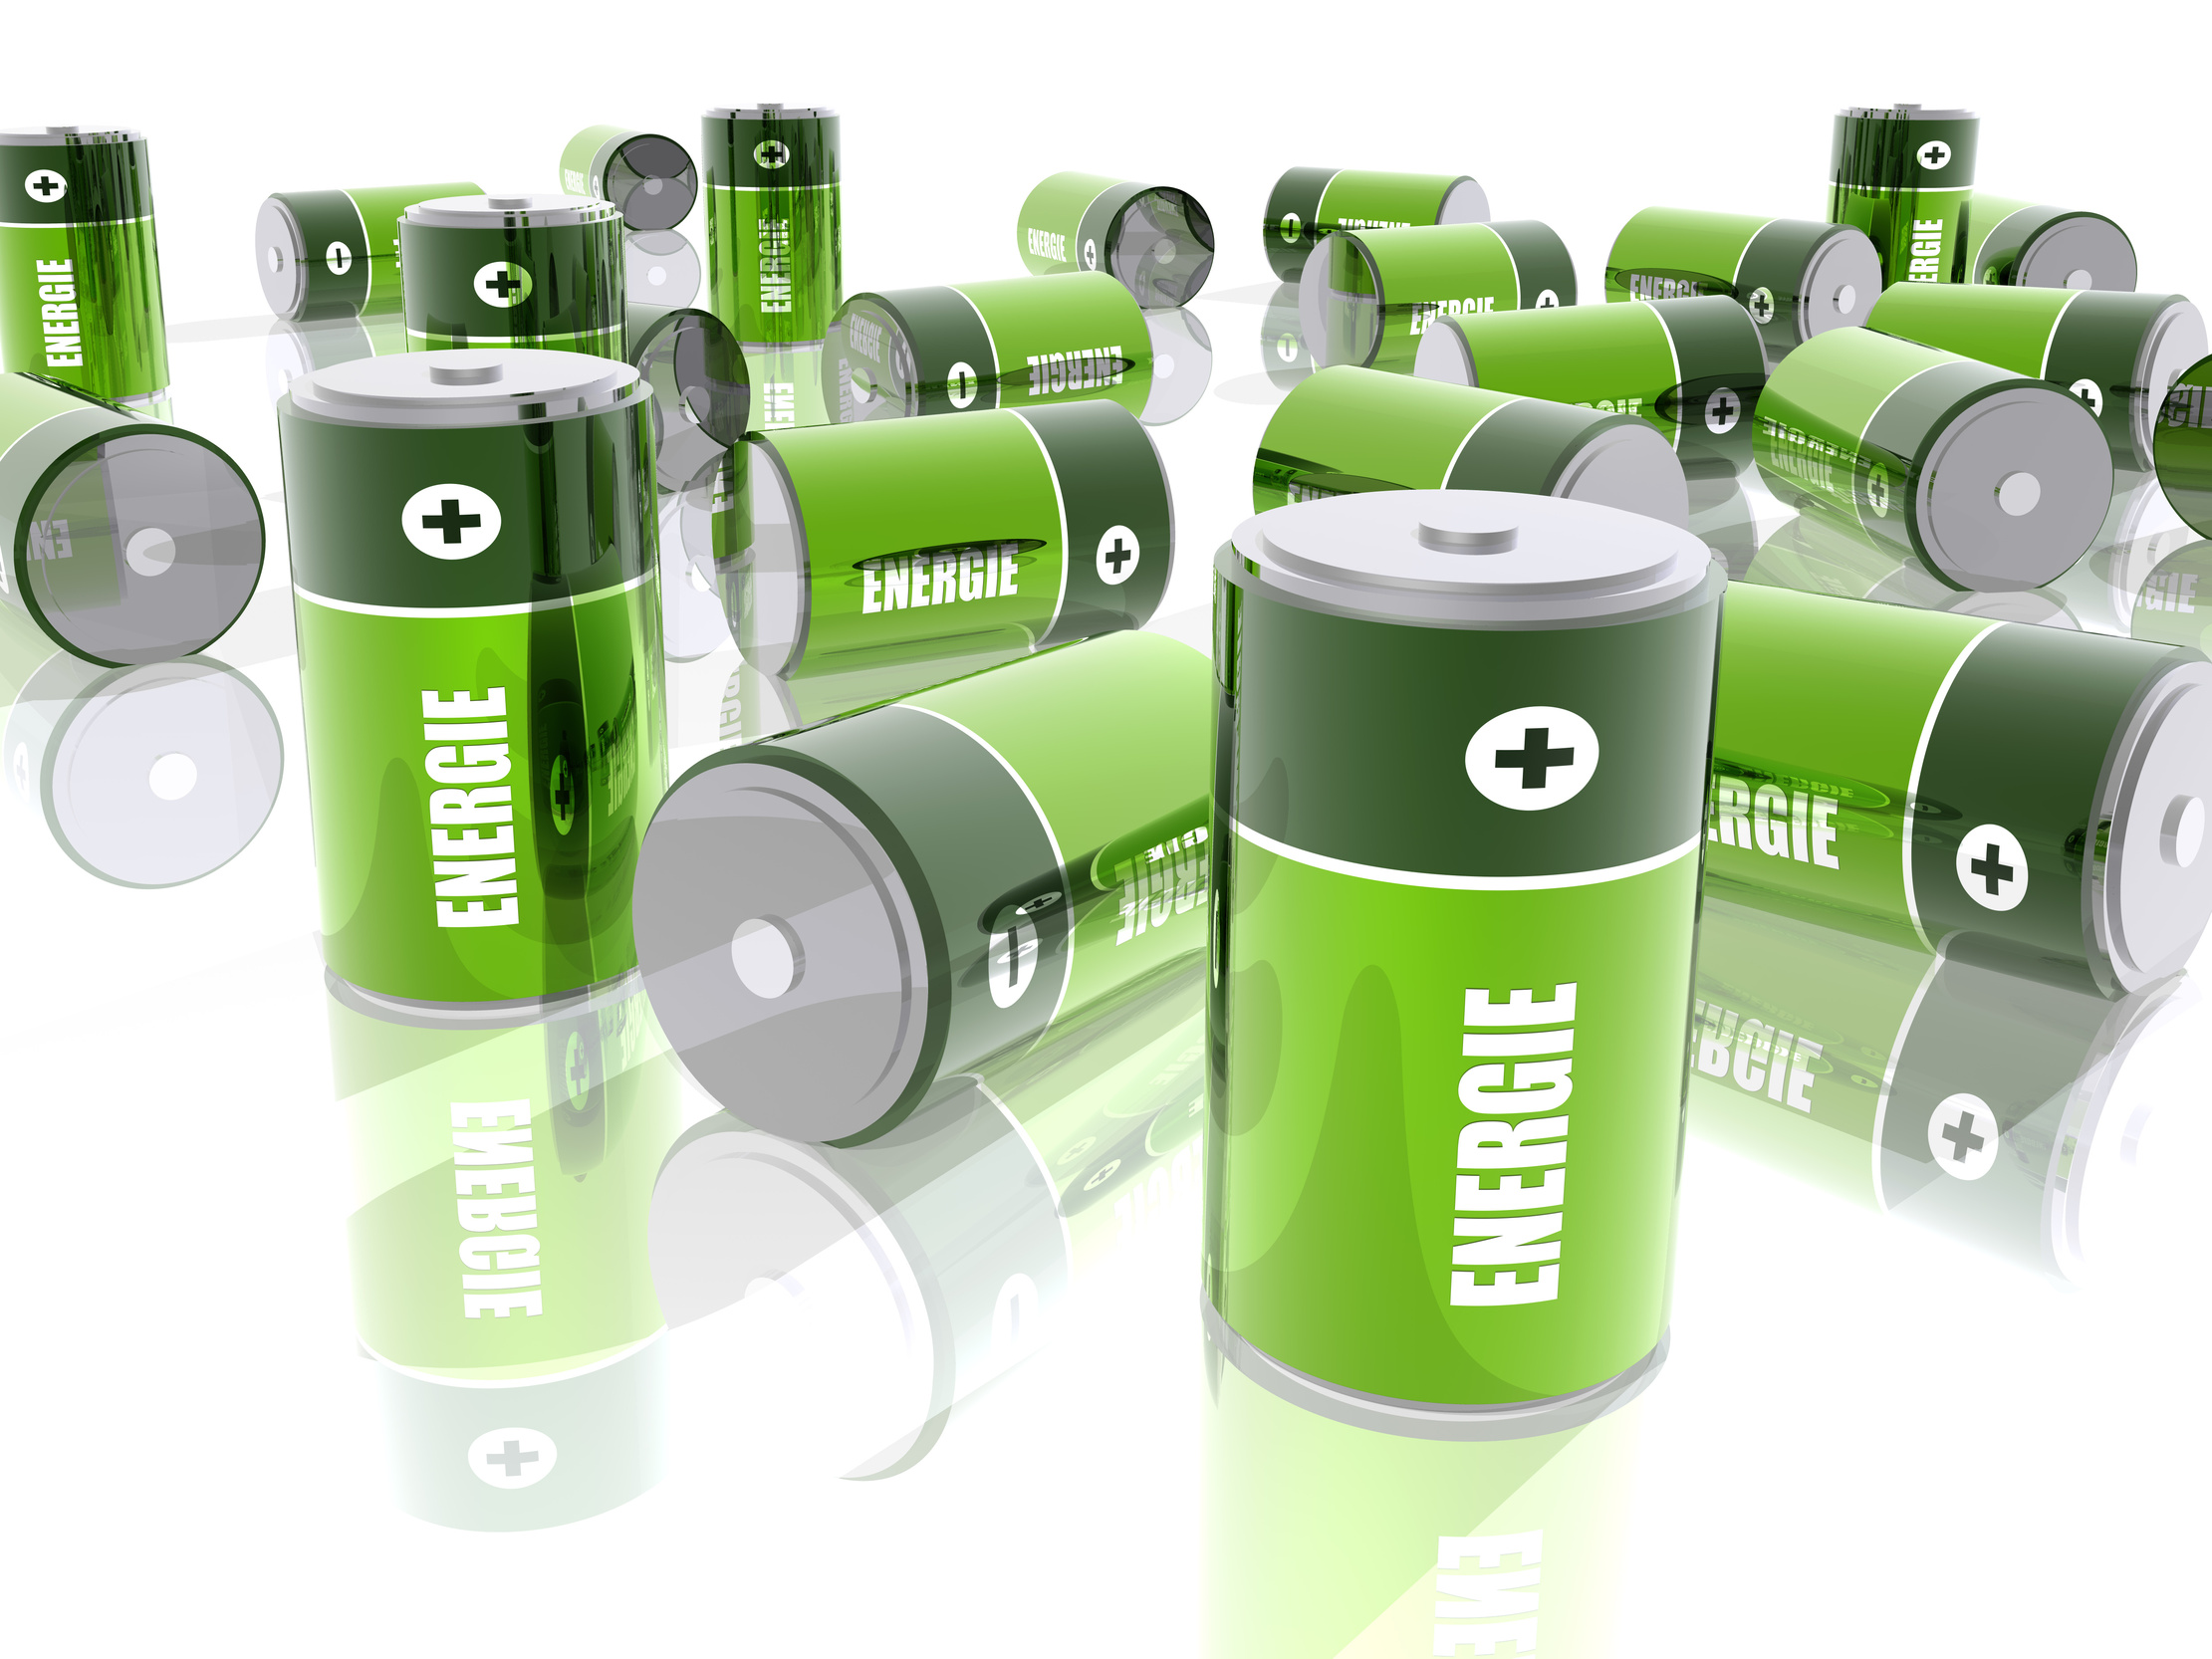 Batterie rechargeable